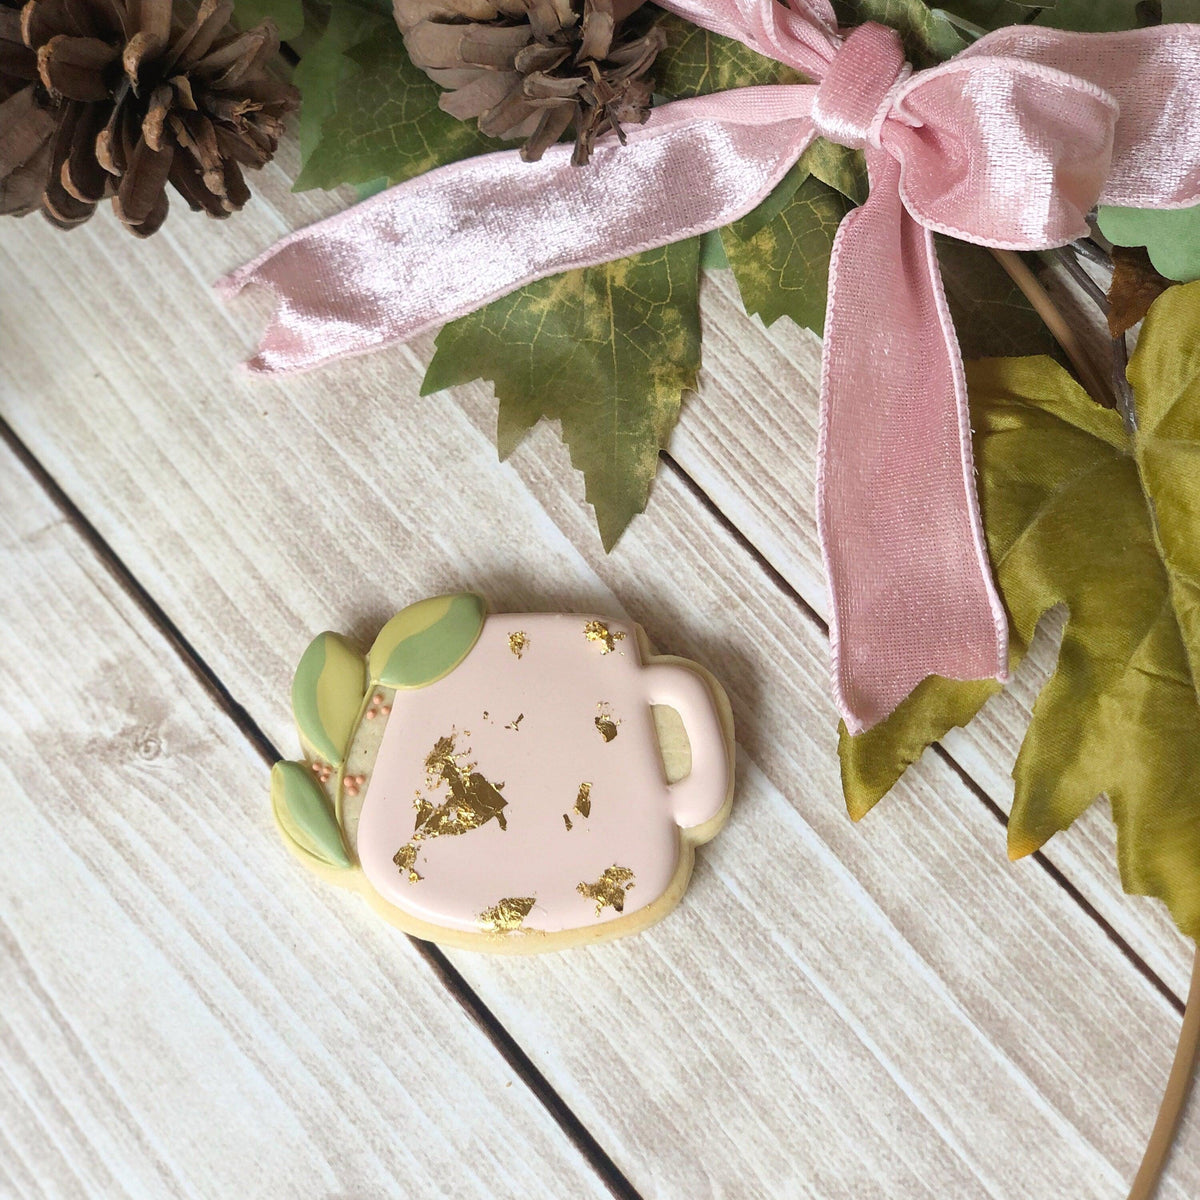 Botanical Clay Mug Cookie Cutter - Sweetleigh 